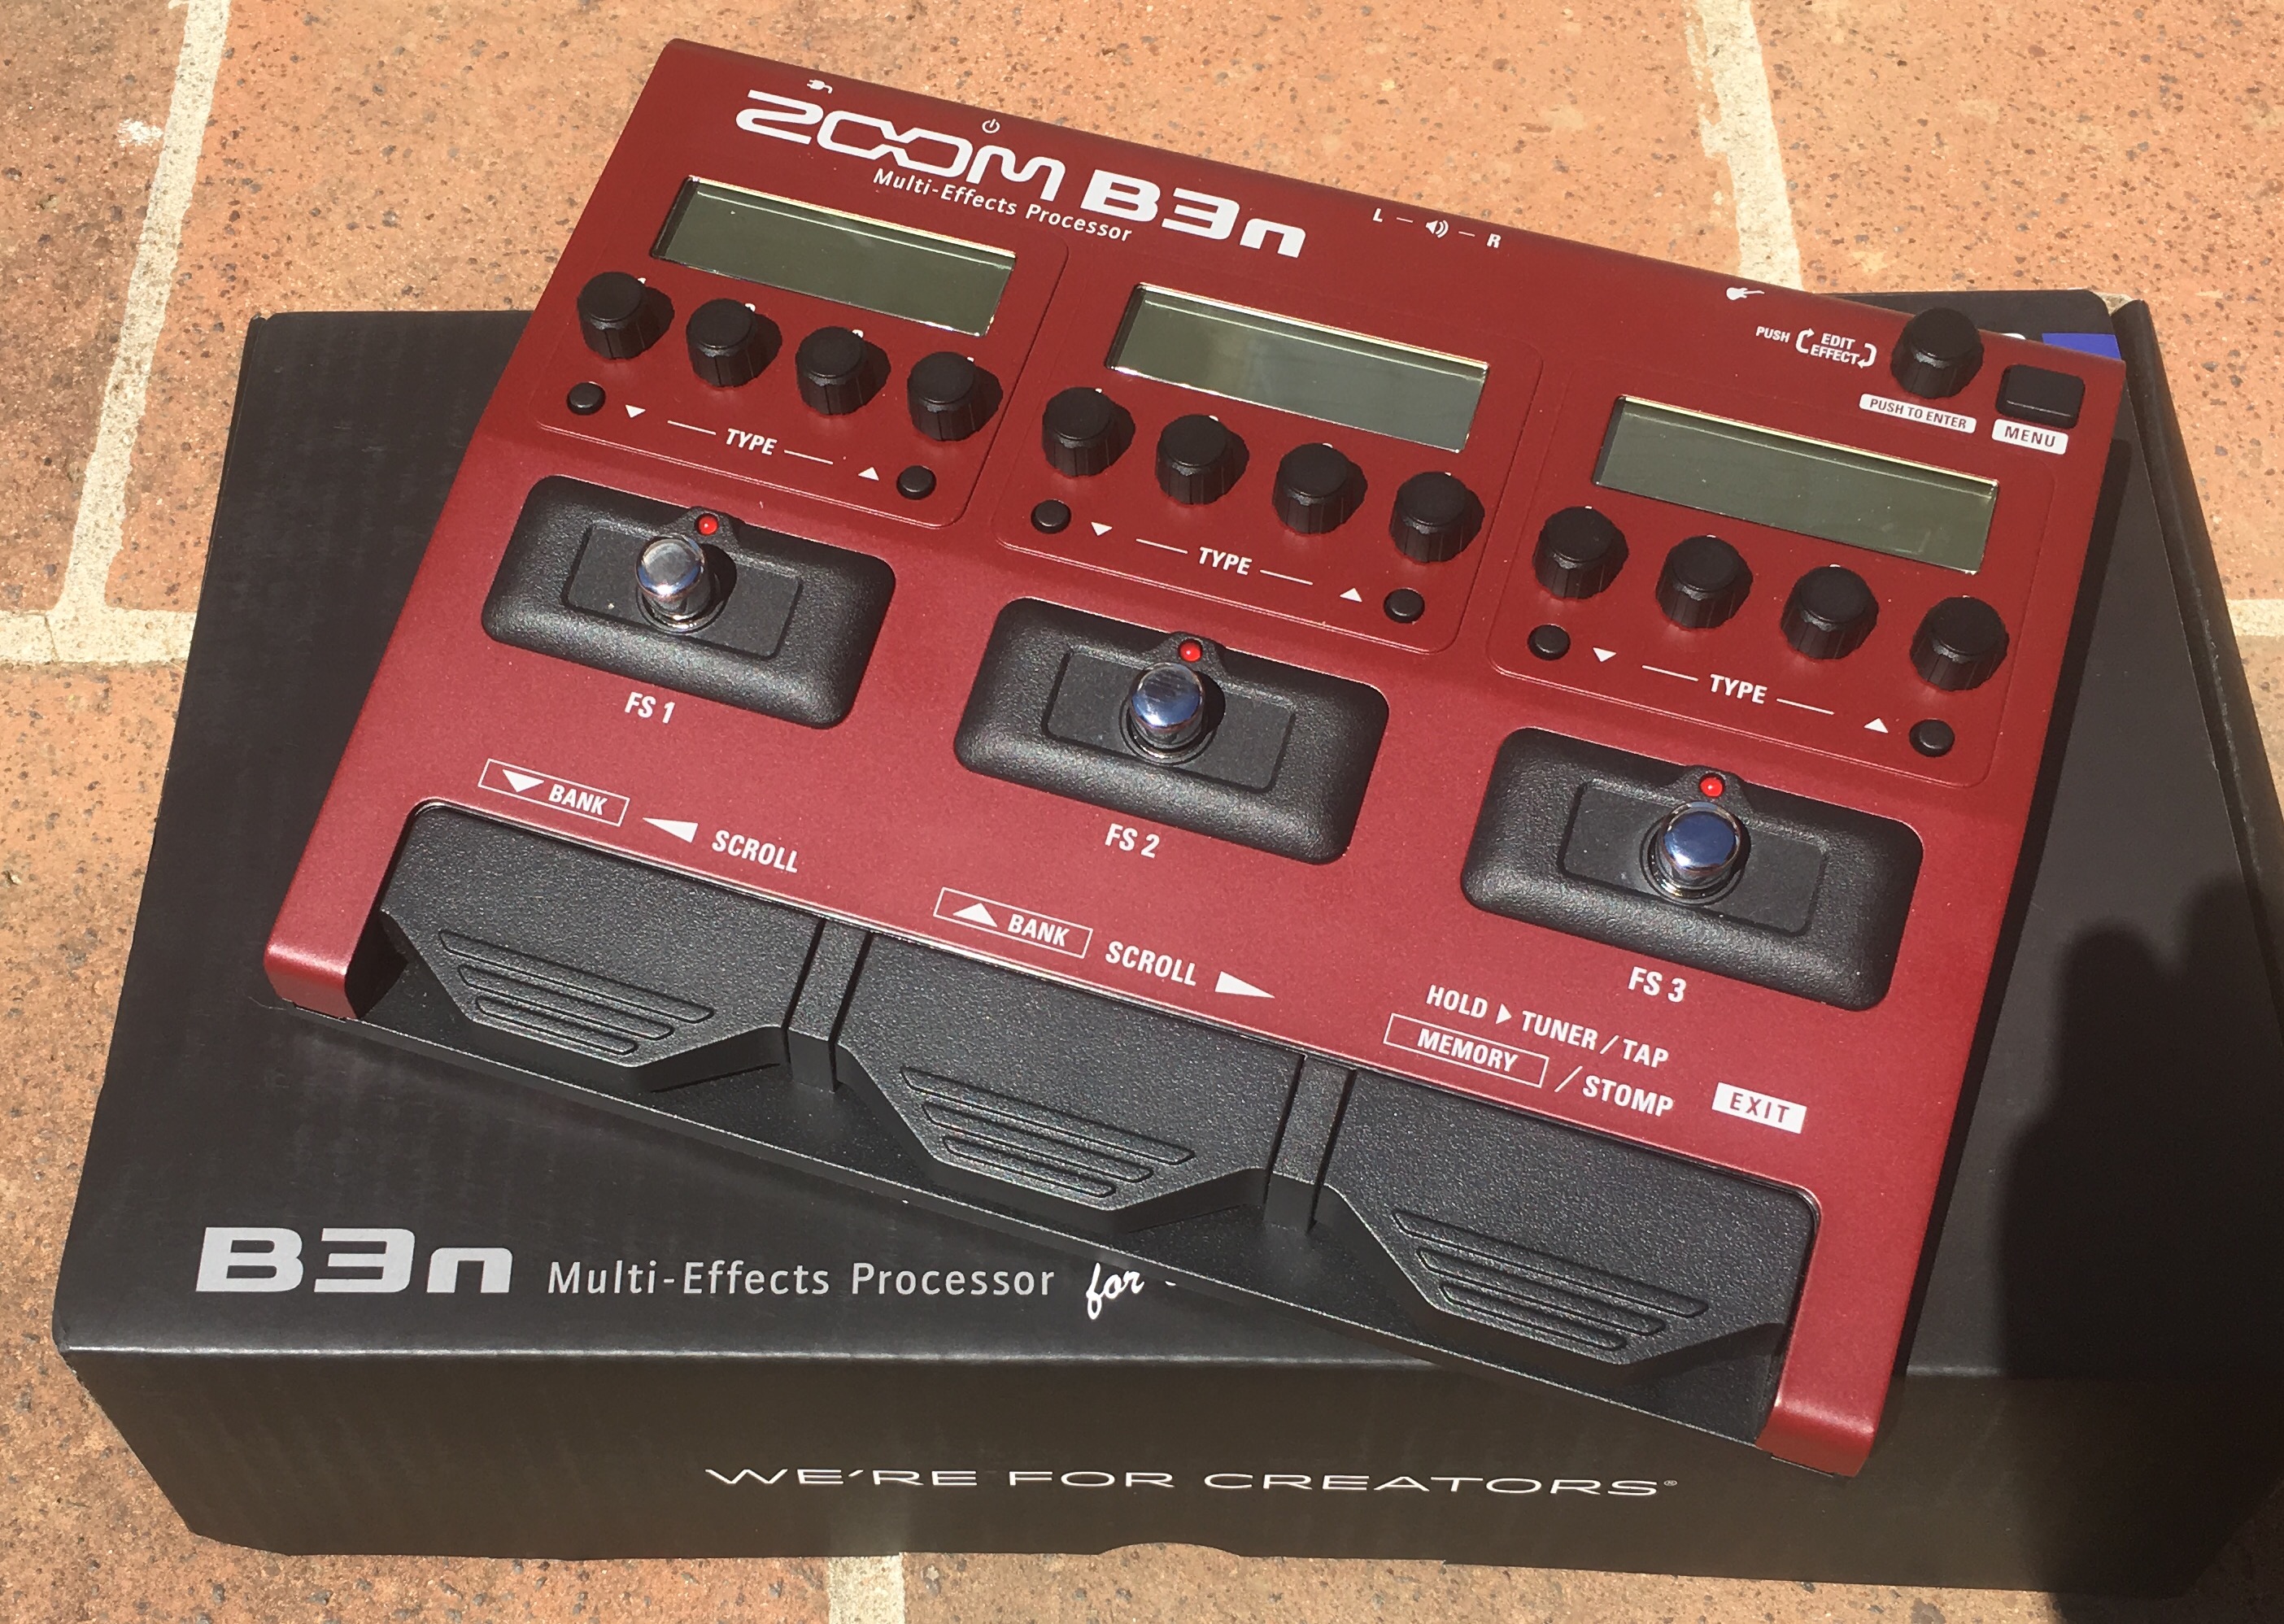 B3n Multi-Effects Processor 購入値下げ | itemimportado.com.br